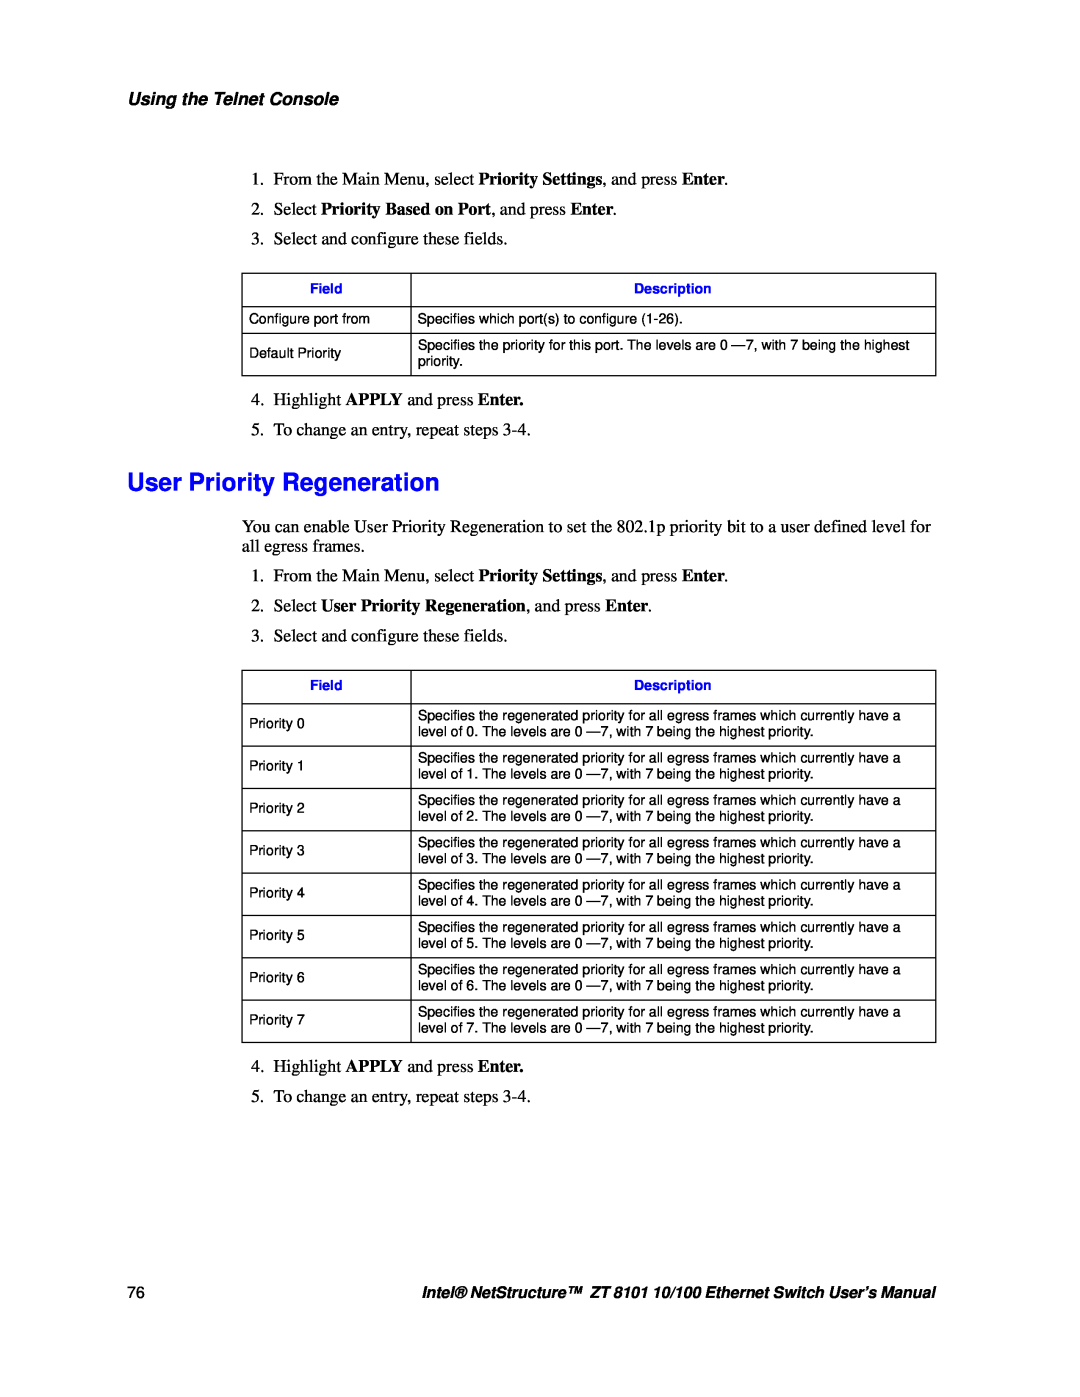 Intel ZT 8101 10/100 user manual User Priority Regeneration, Using the Telnet Console, Field, Description 